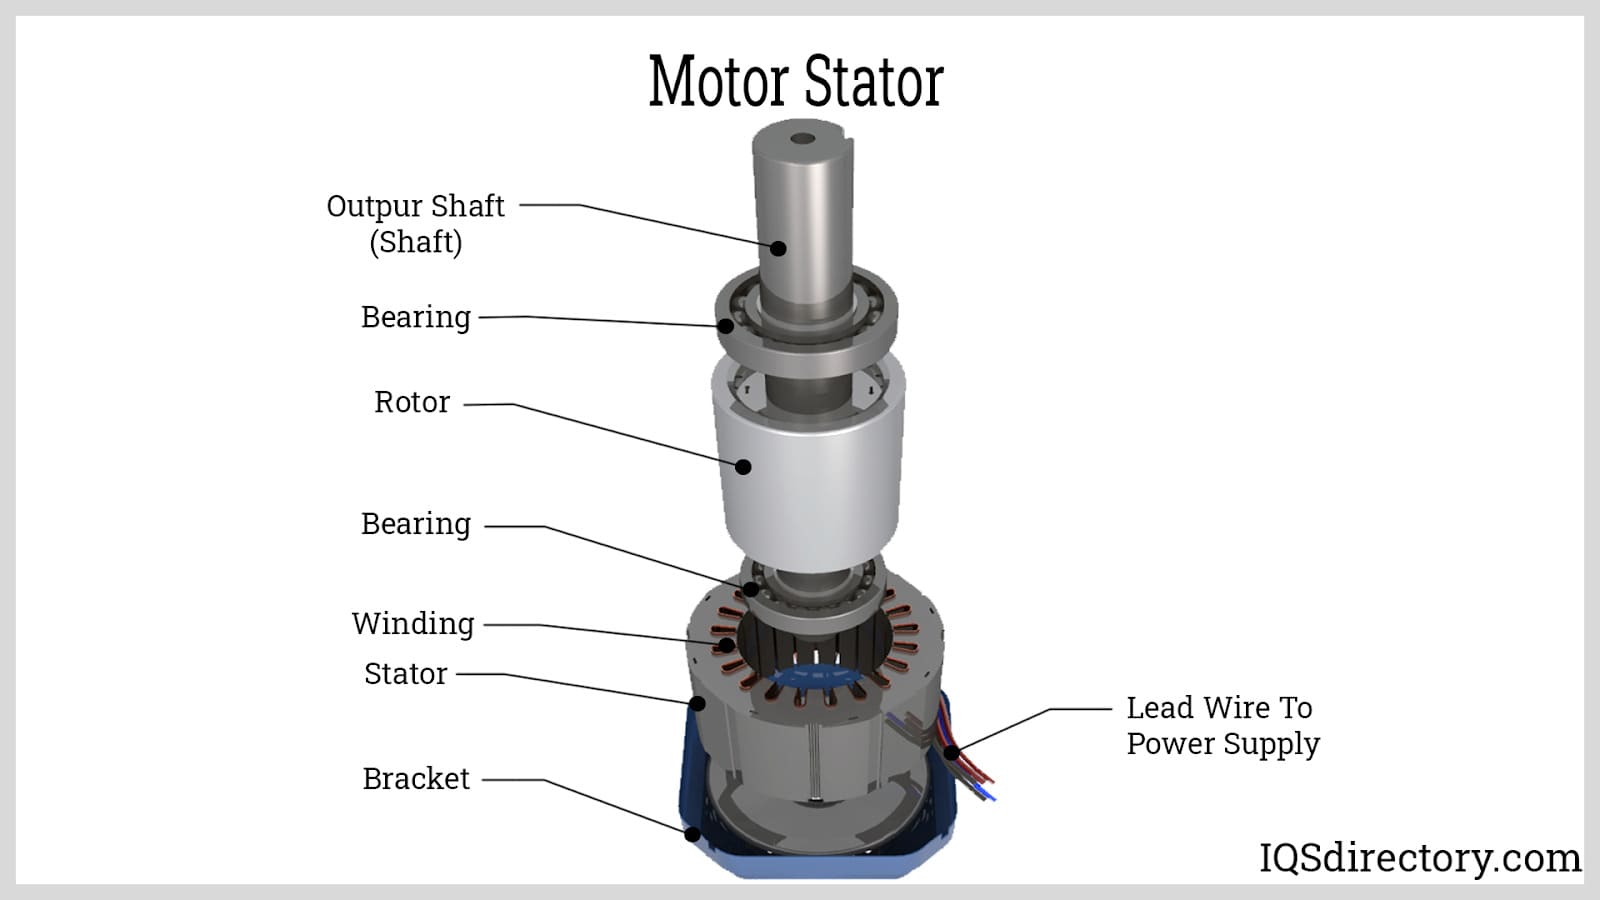 Motor Stator